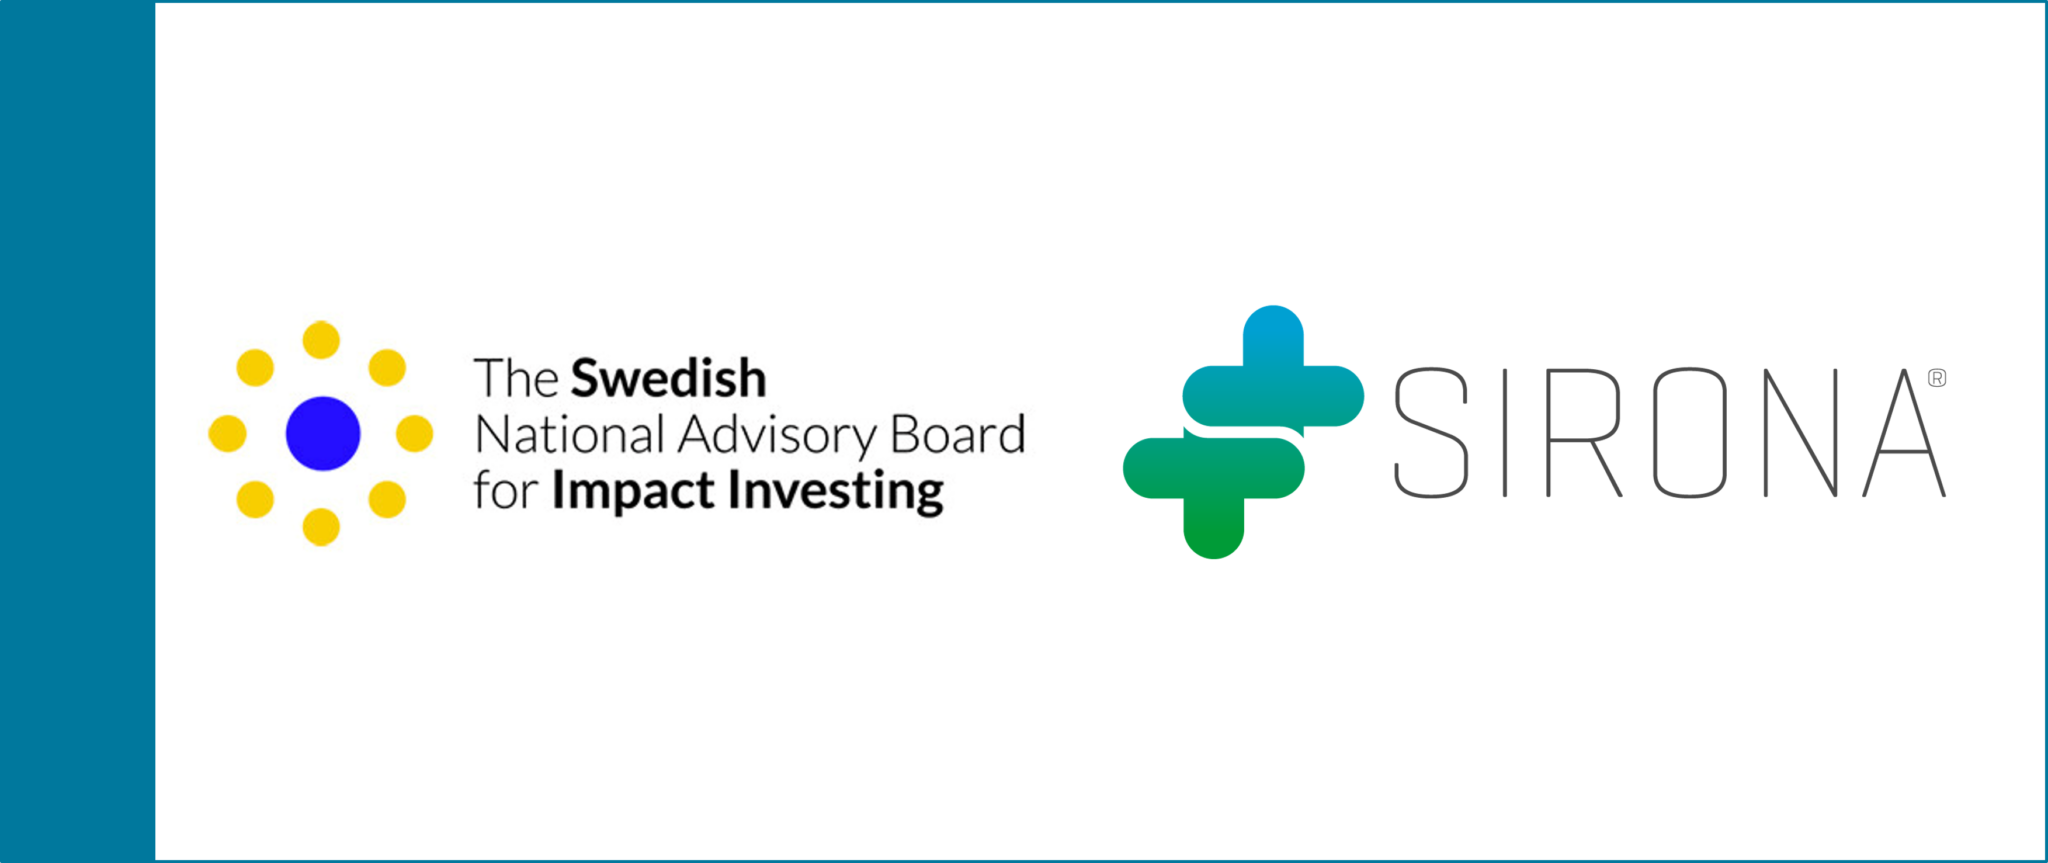 Sirona är nu medlemmar i Swedish National Advisory Board for Impact Investing!